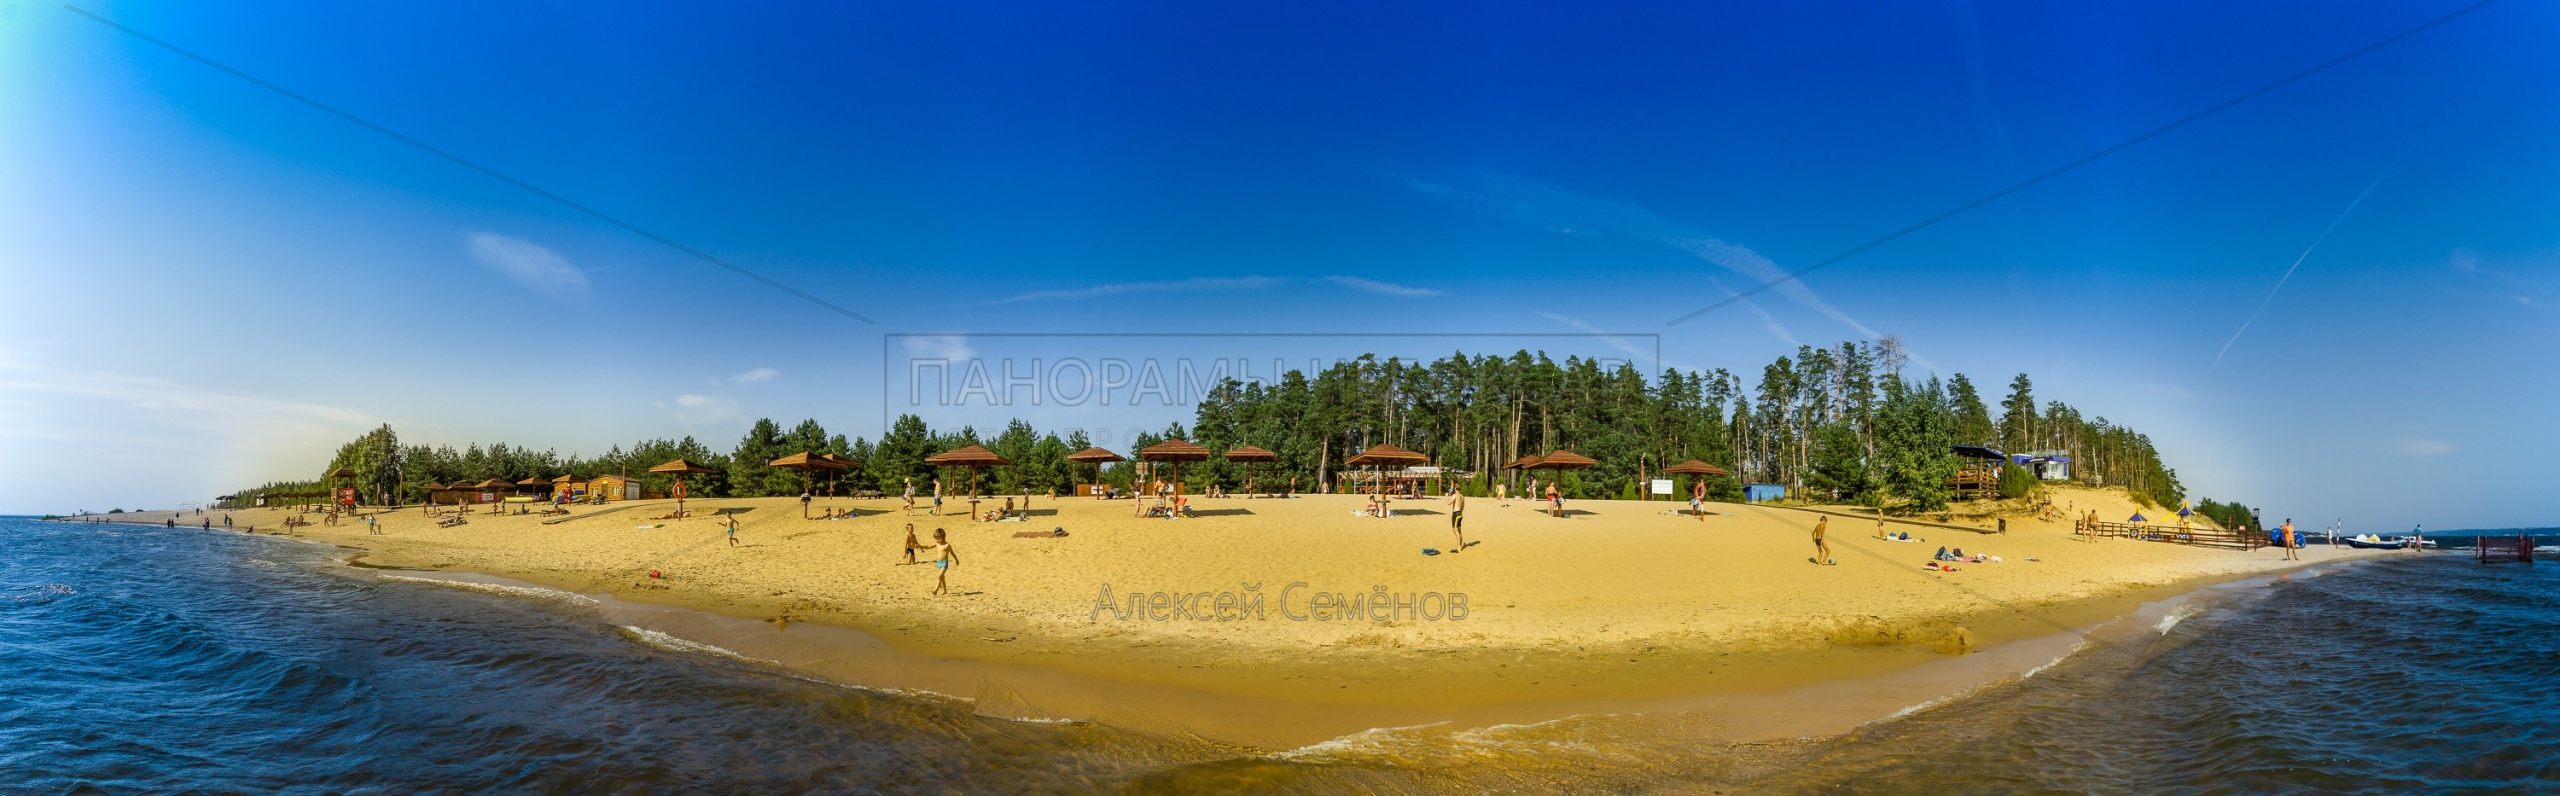 Левобережный пляж Чебоксары 2016